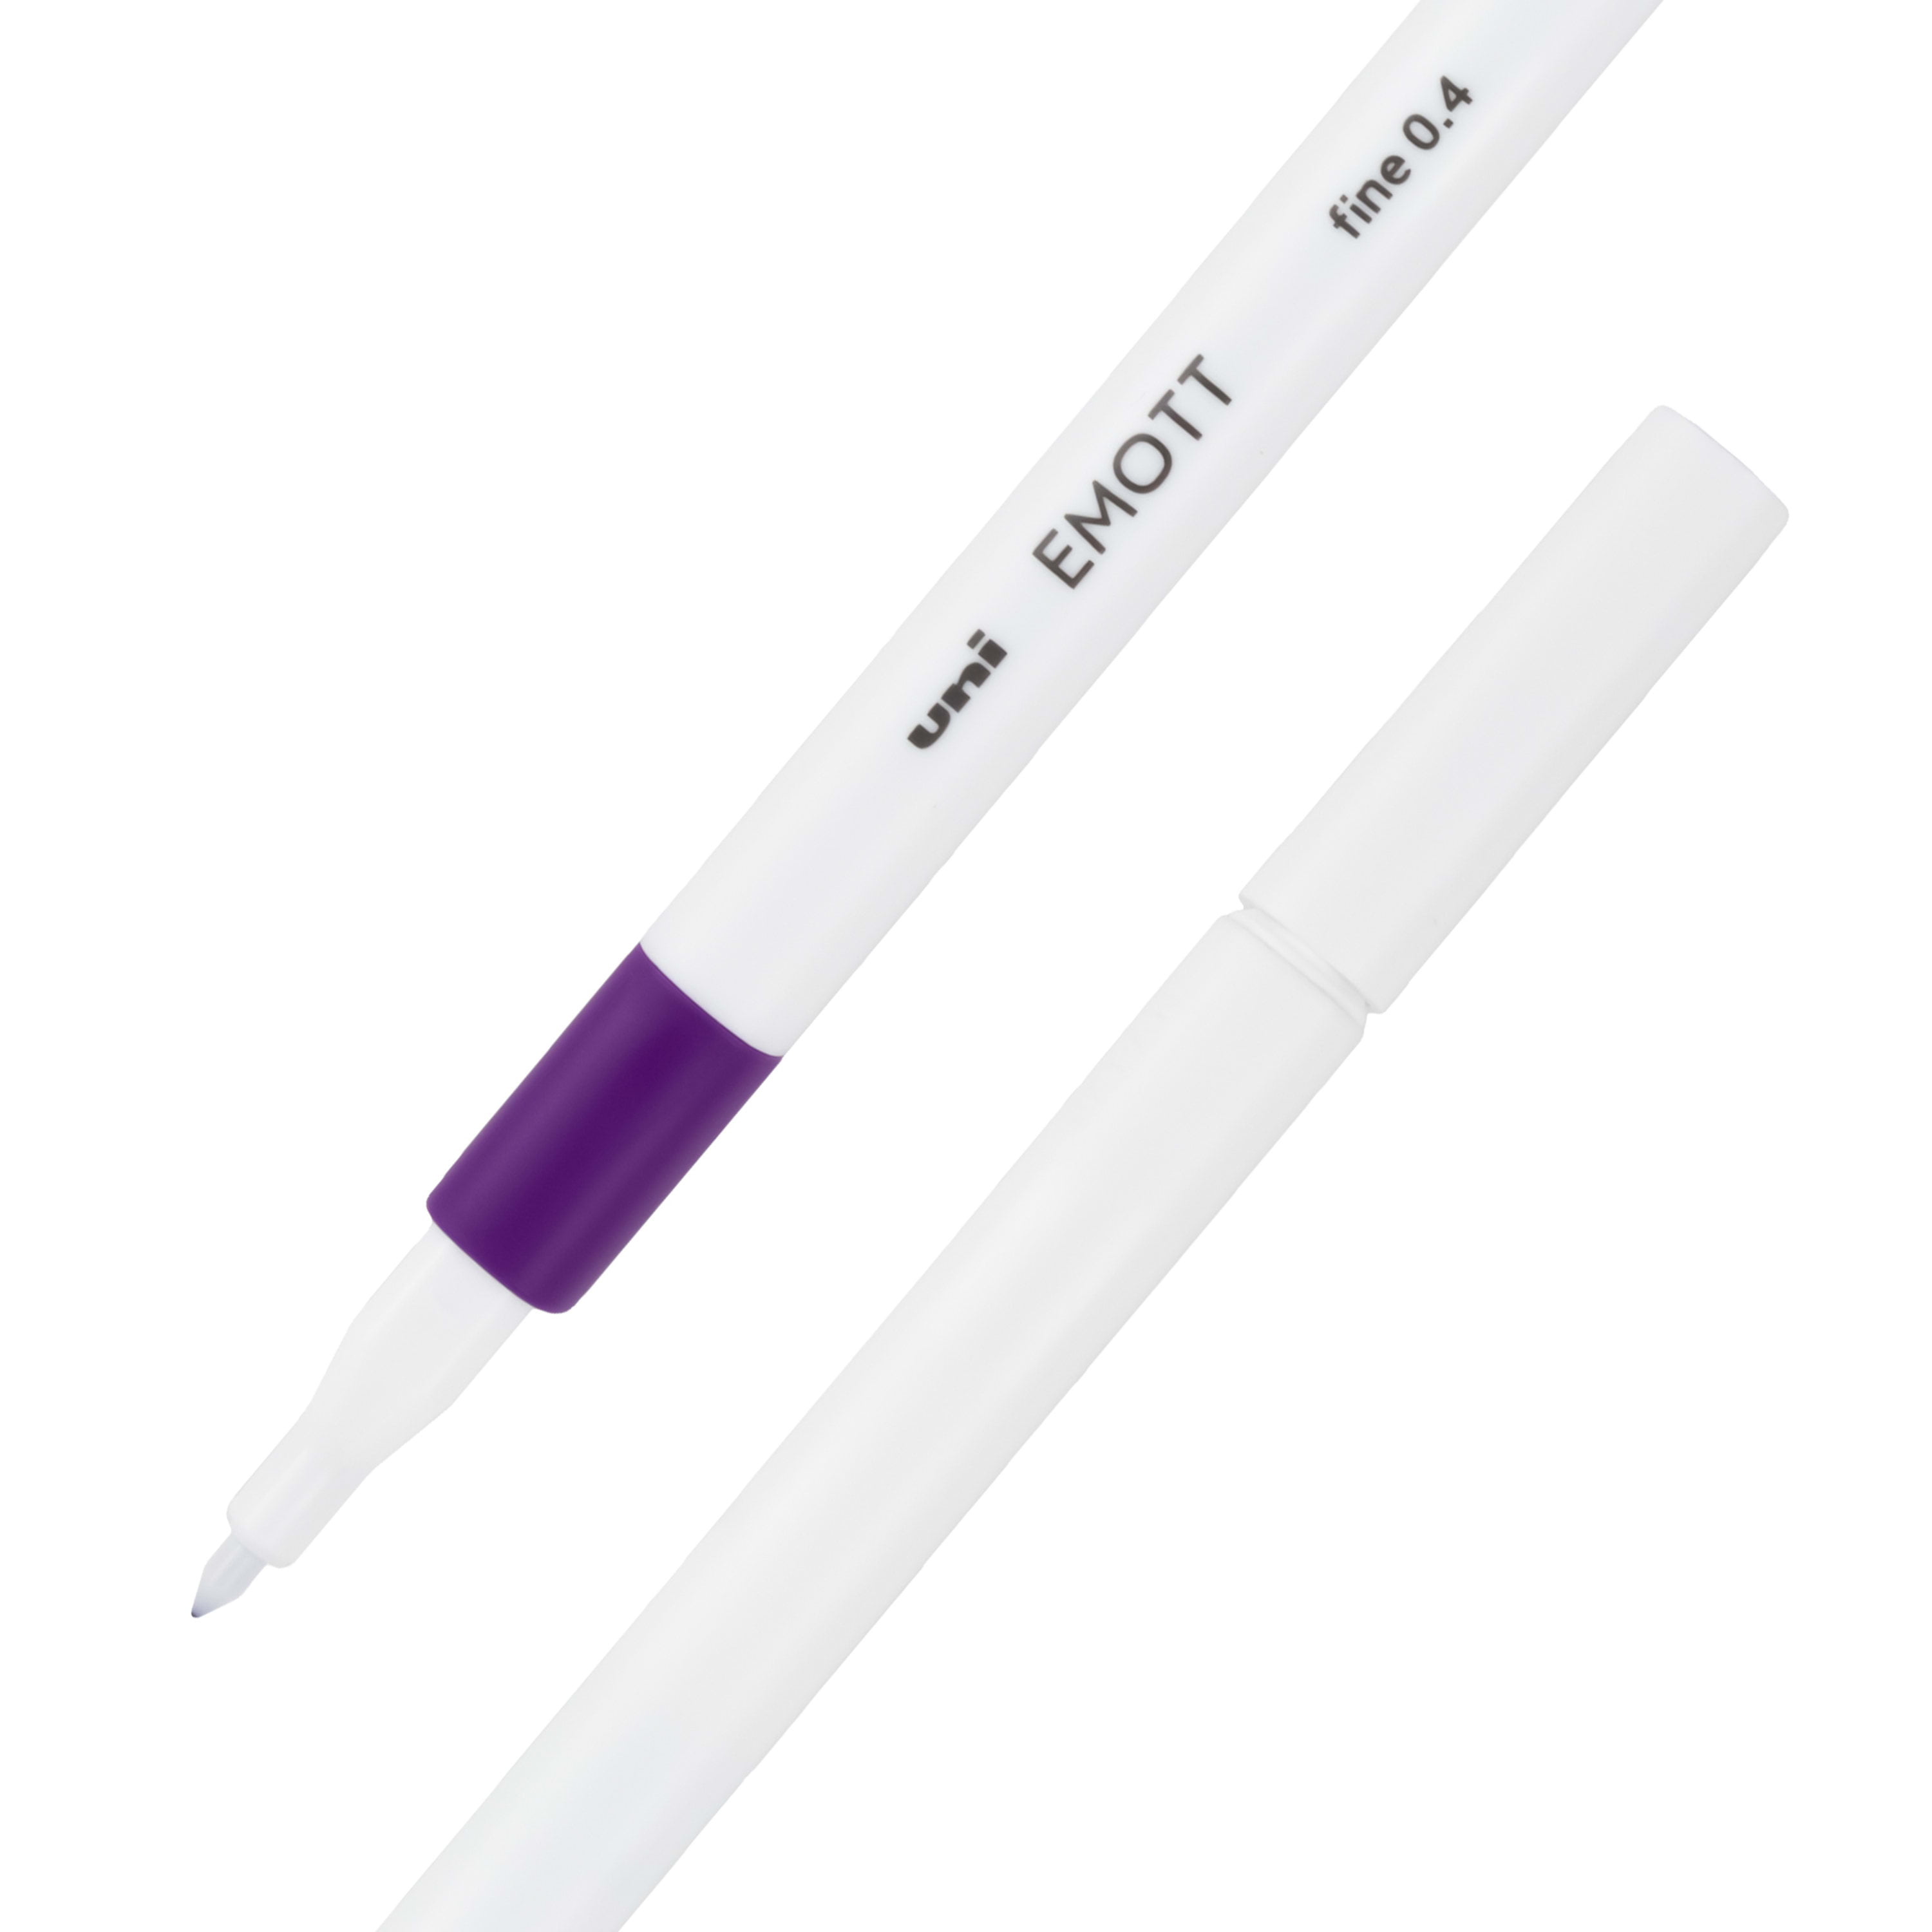 EMOTT ever fine Porous Point Pen, Stick, Fine 0.4 mm, Assorted Ink Colors,  White Barrel, 40/Pack - Zerbee